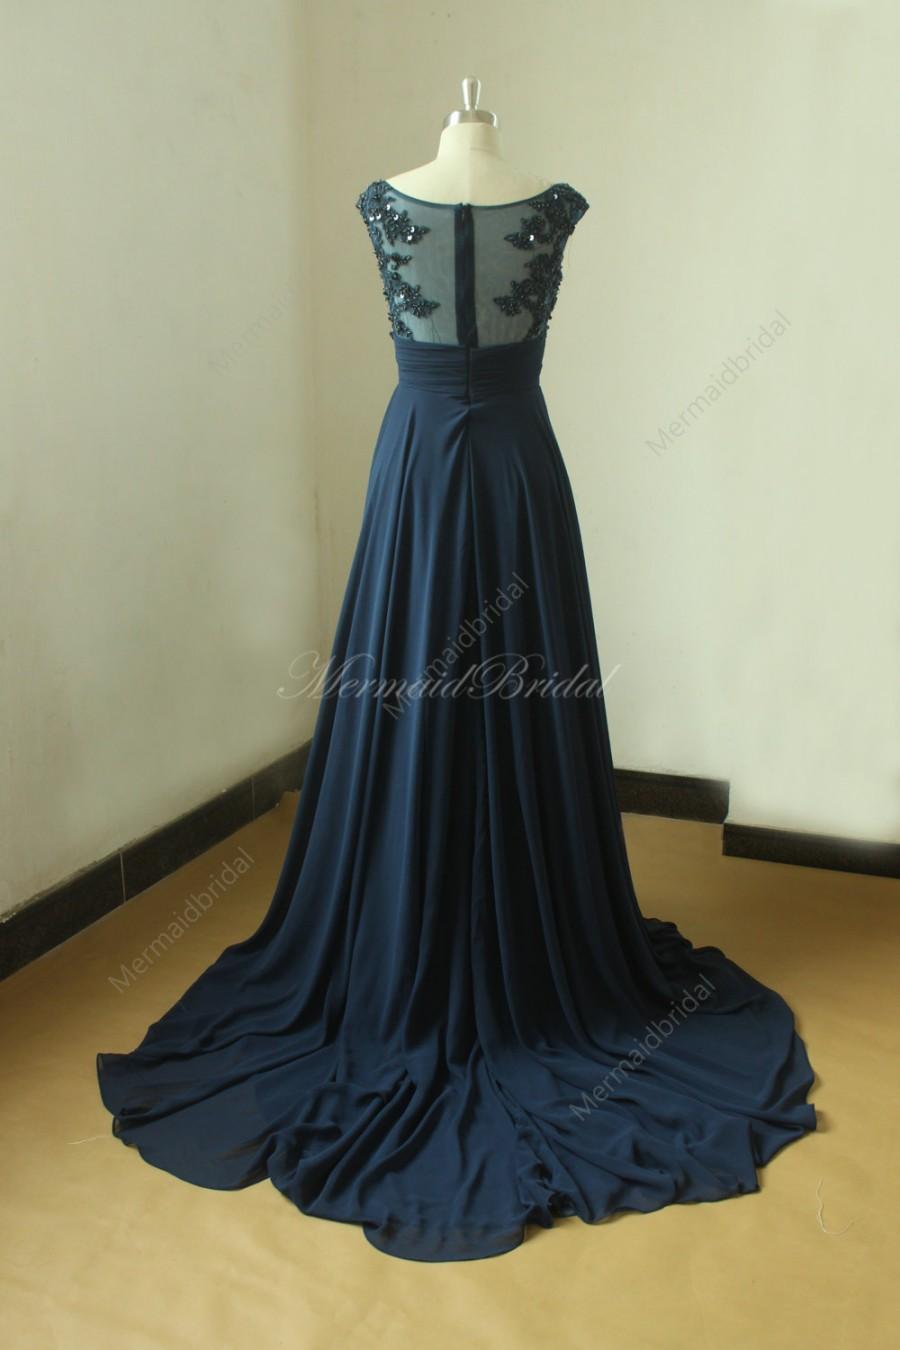 Wedding - Backless Navy blue A line chiffon lace wedding dress with illusion neckline